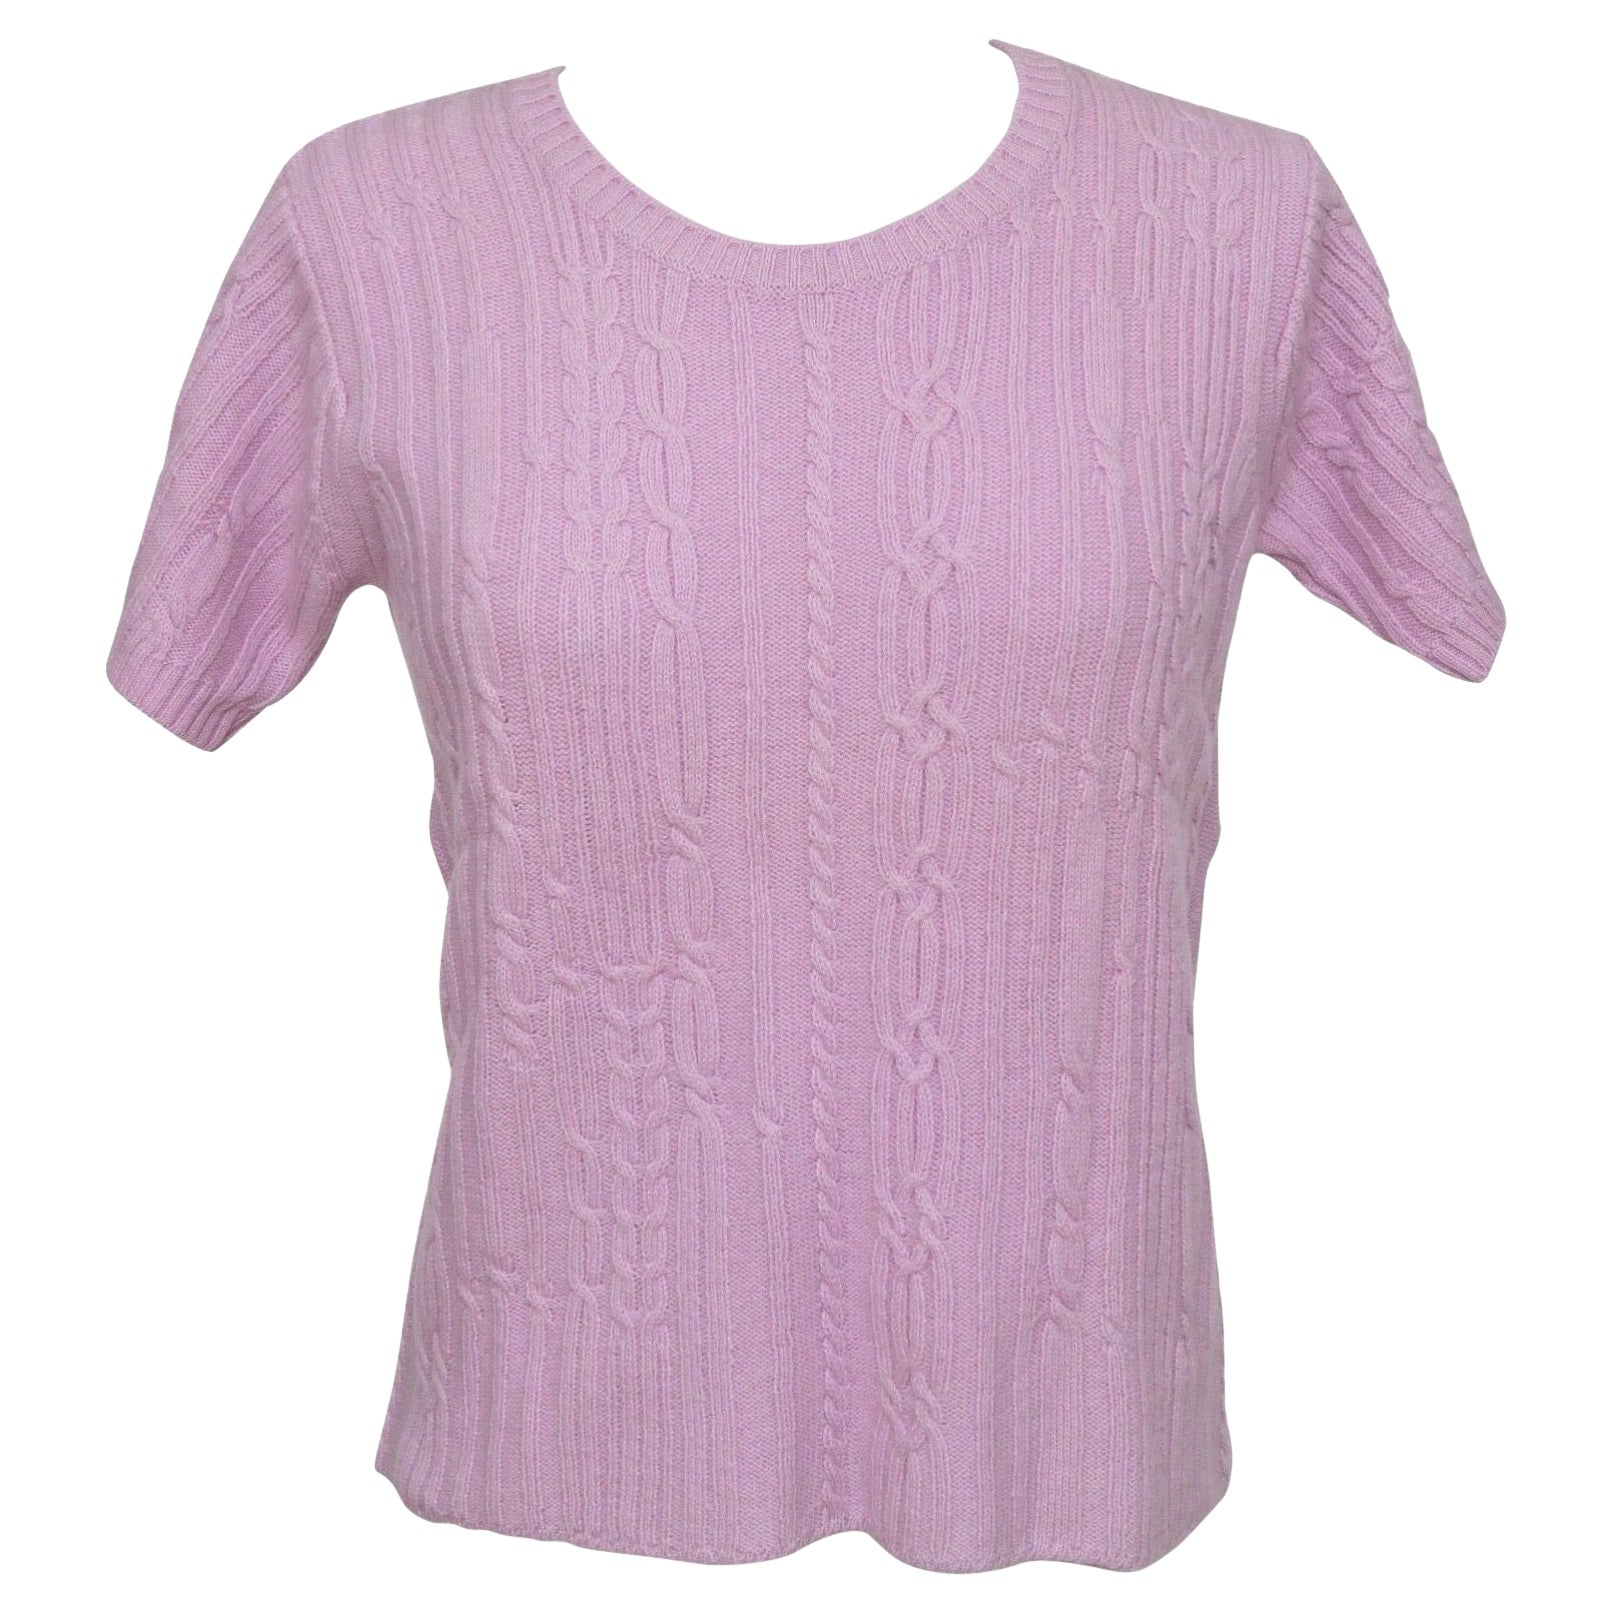 CHLOE Sweater Knit Short Sleeve Top Pink Crew Neck Wool Sz S